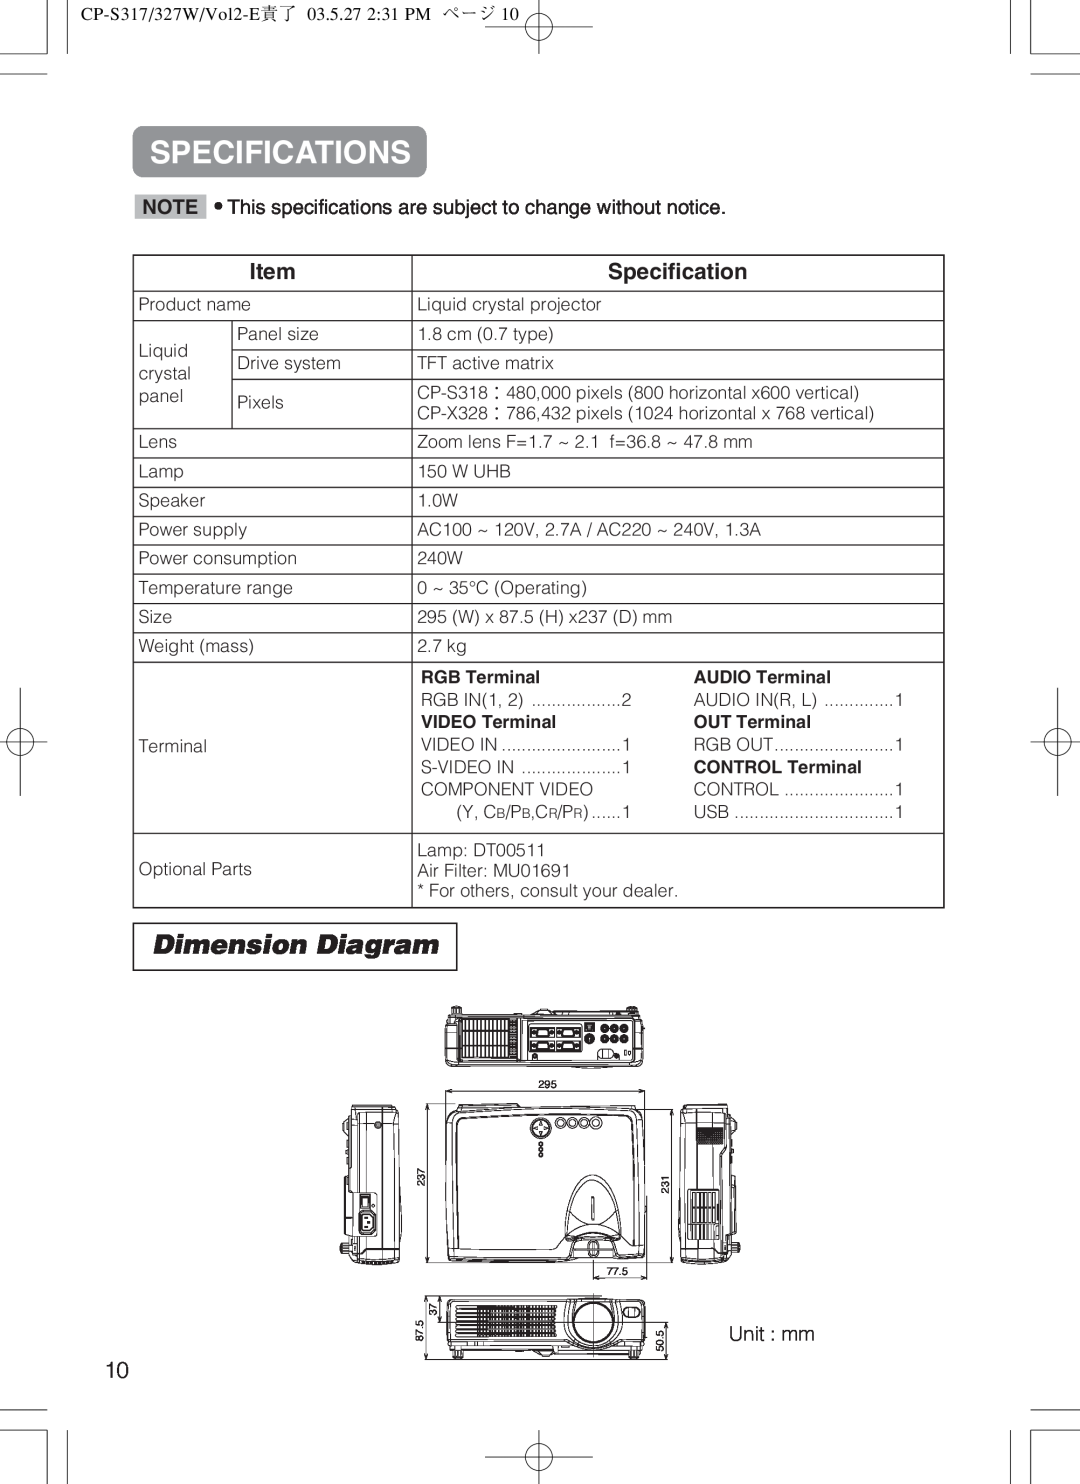 Hitachi cp-s318 user manual Specifications, Dimension Diagram 